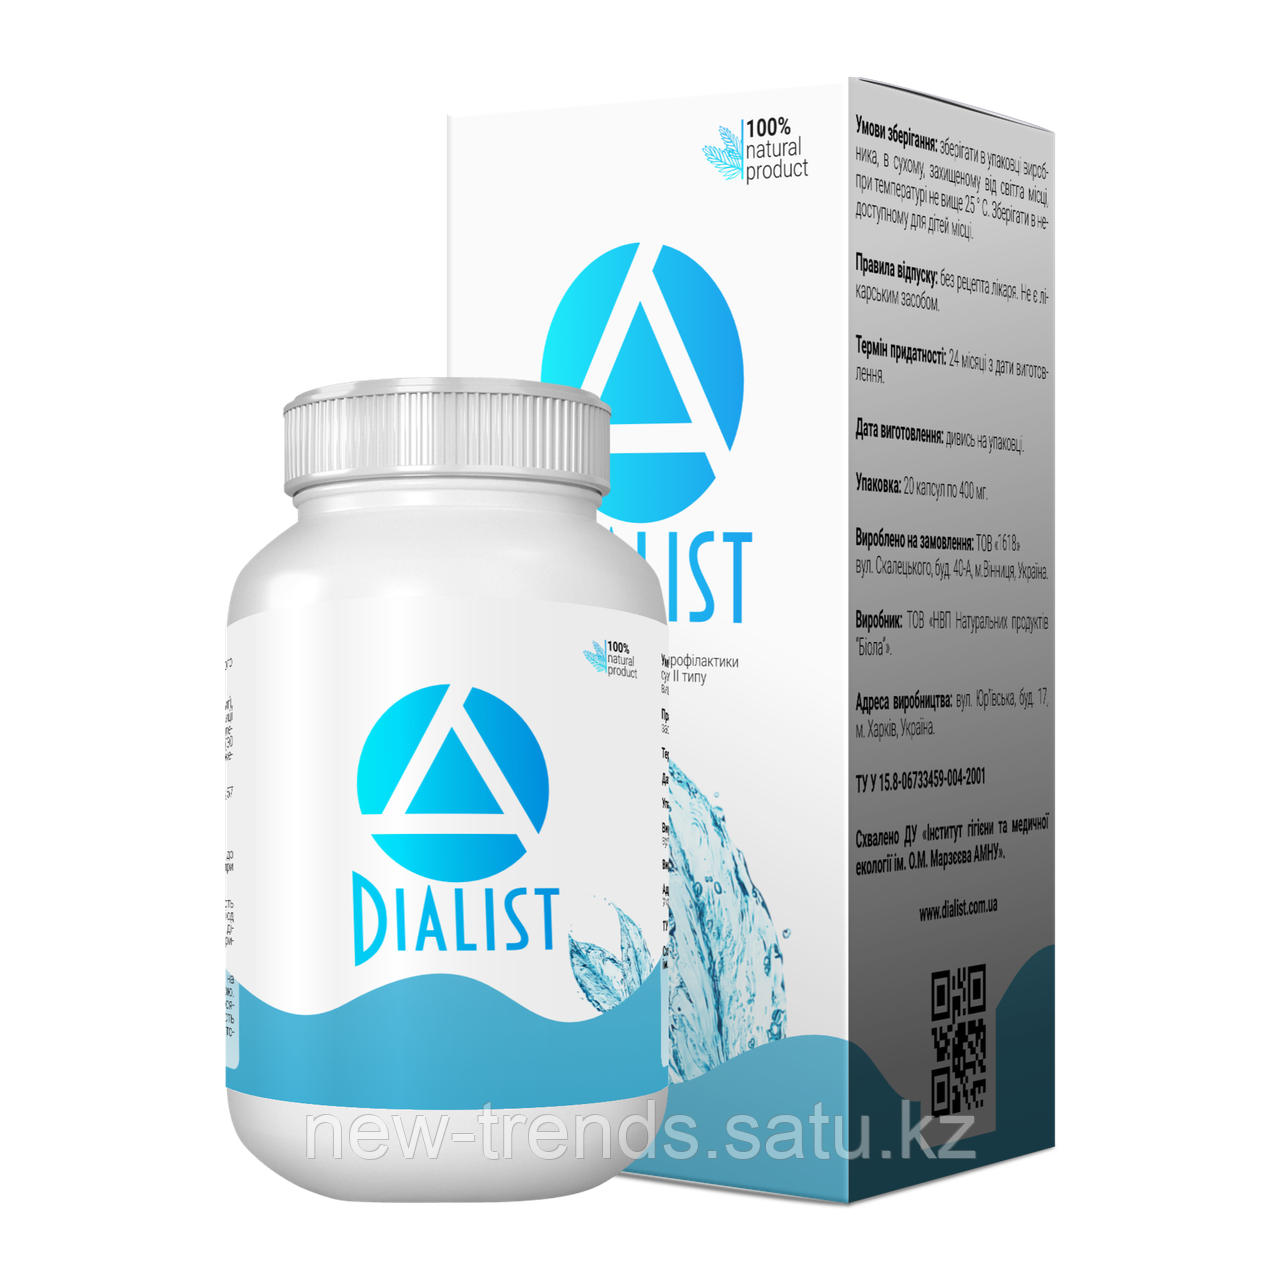 Dialist - натуральное средство от диабета II типа